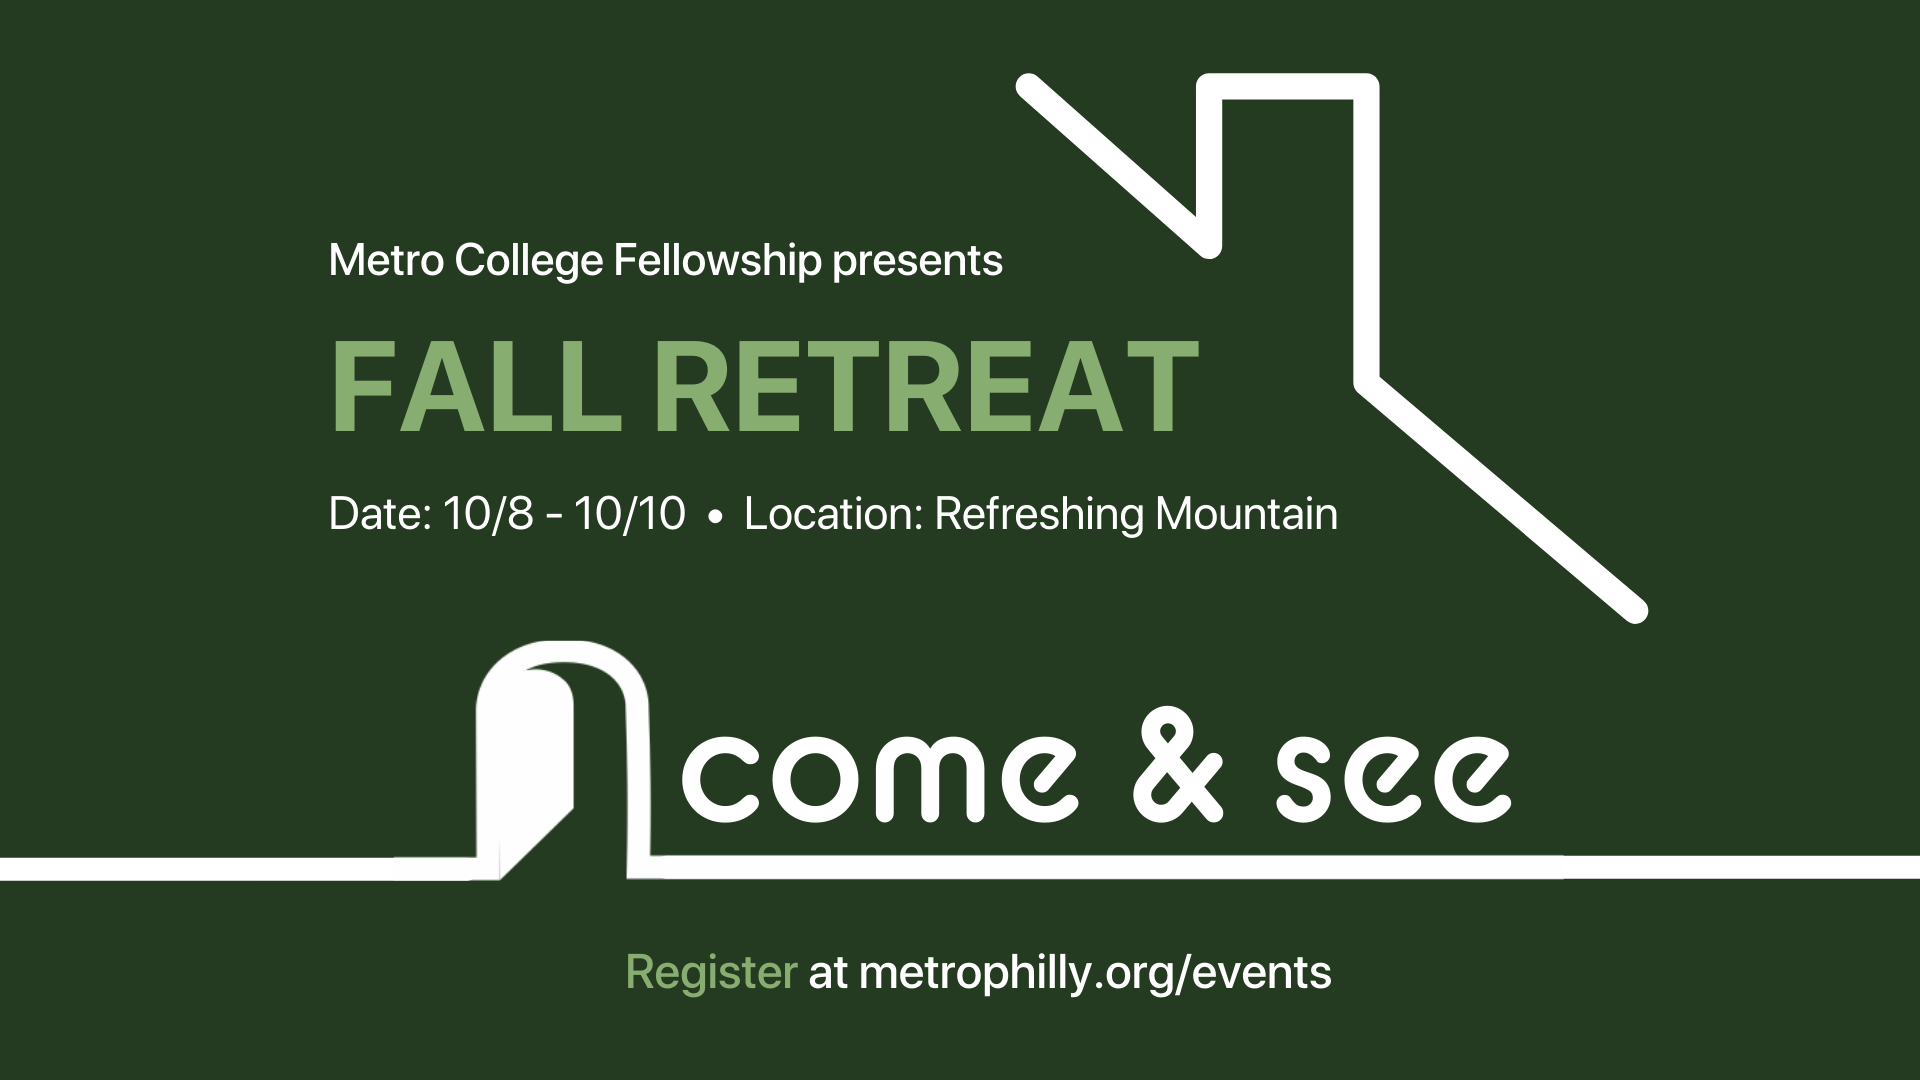 MCF Fall Retreat: Come & See